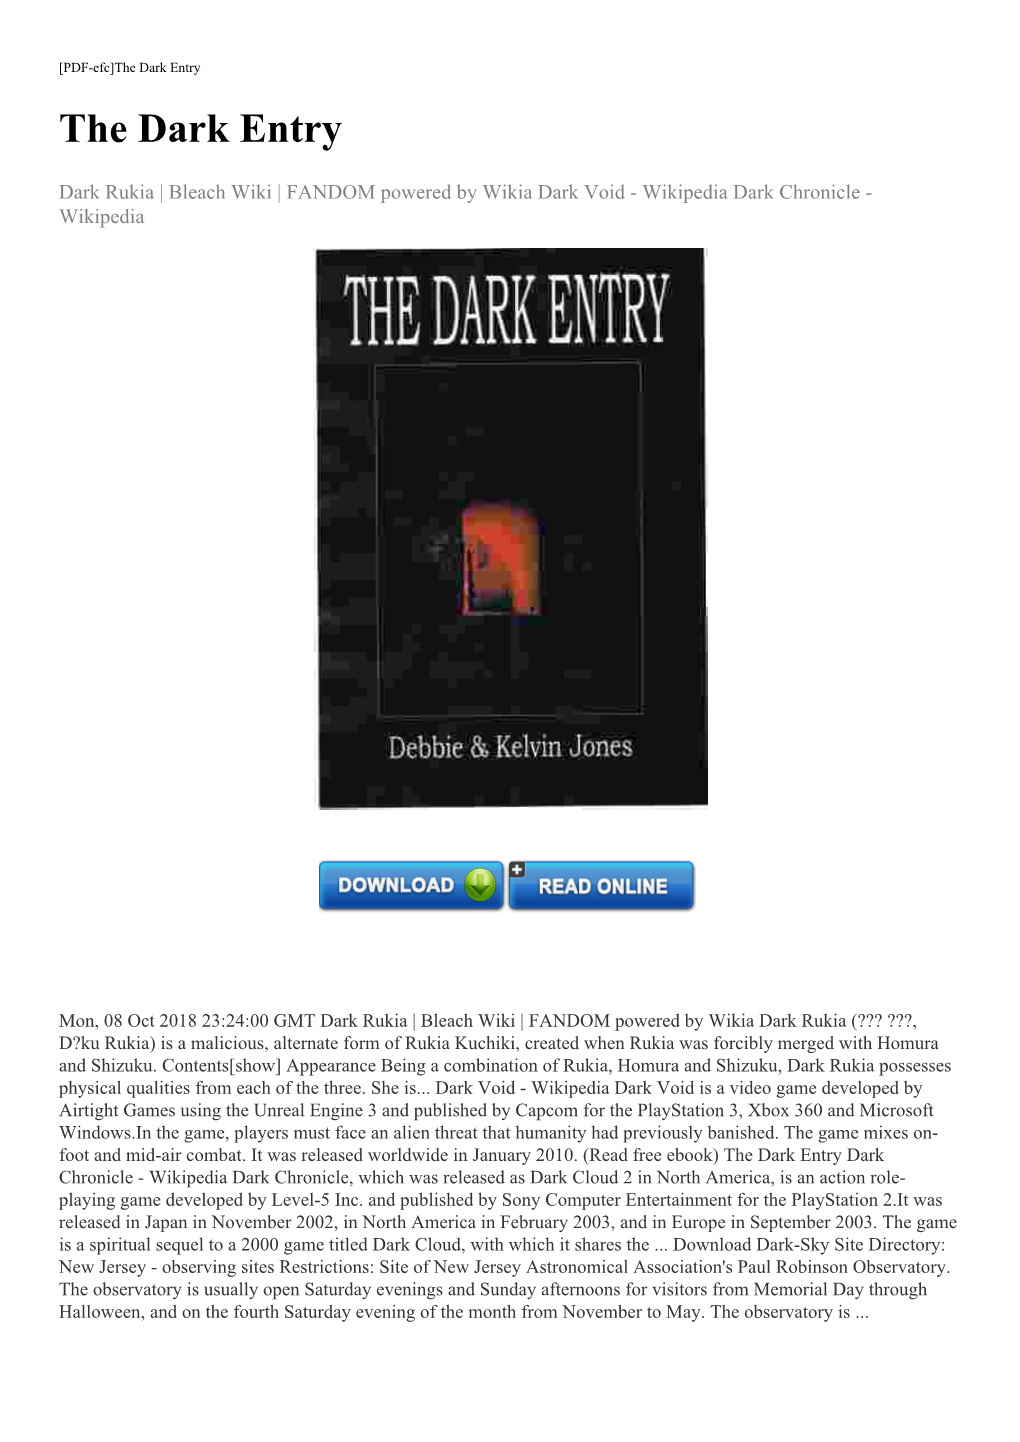 (Read Free Ebook) the Dark Entry